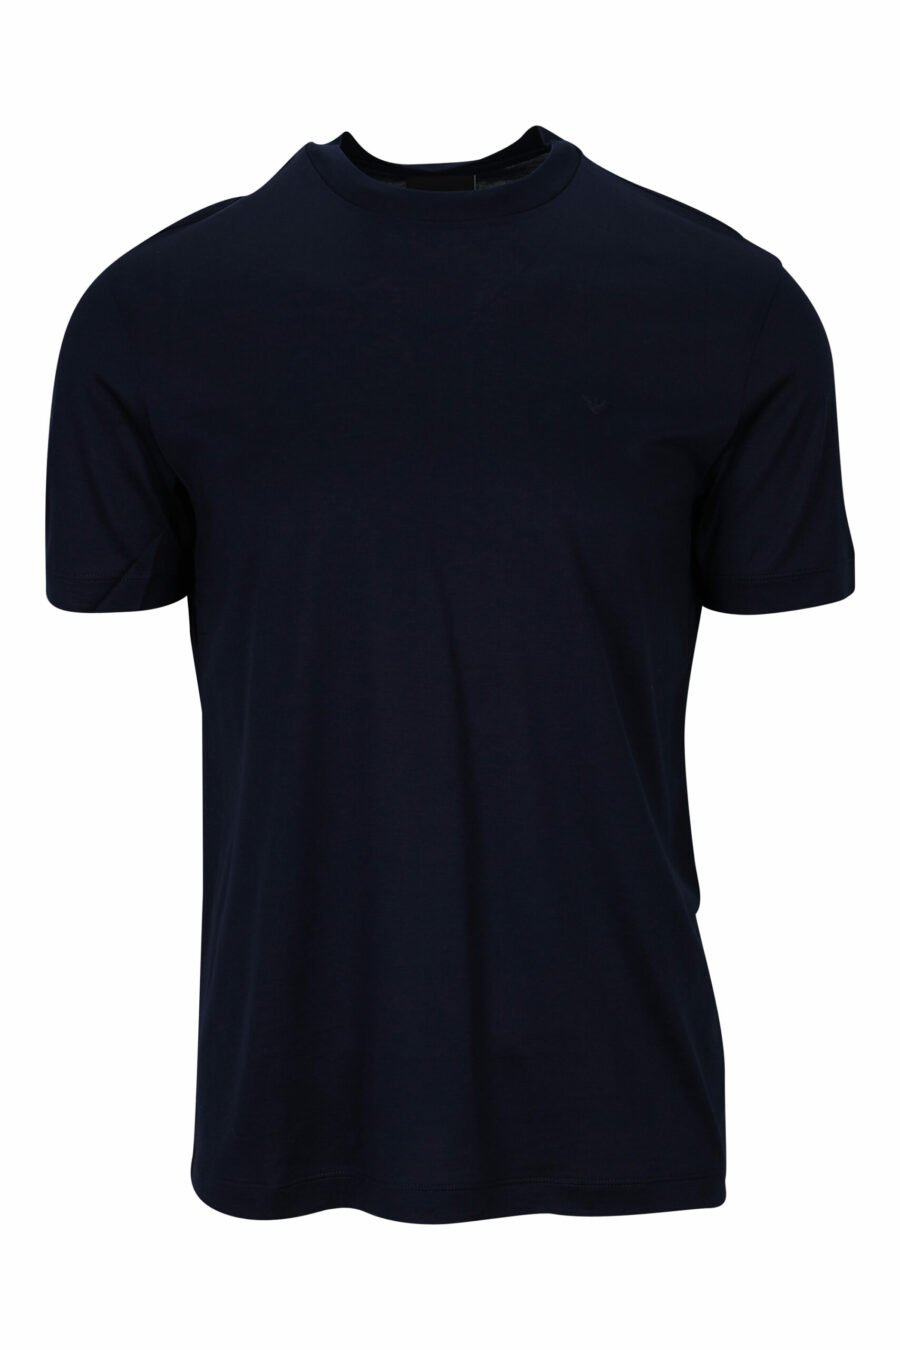 Camiseta azul marino con minilogo águila - 8057767732455 scaled